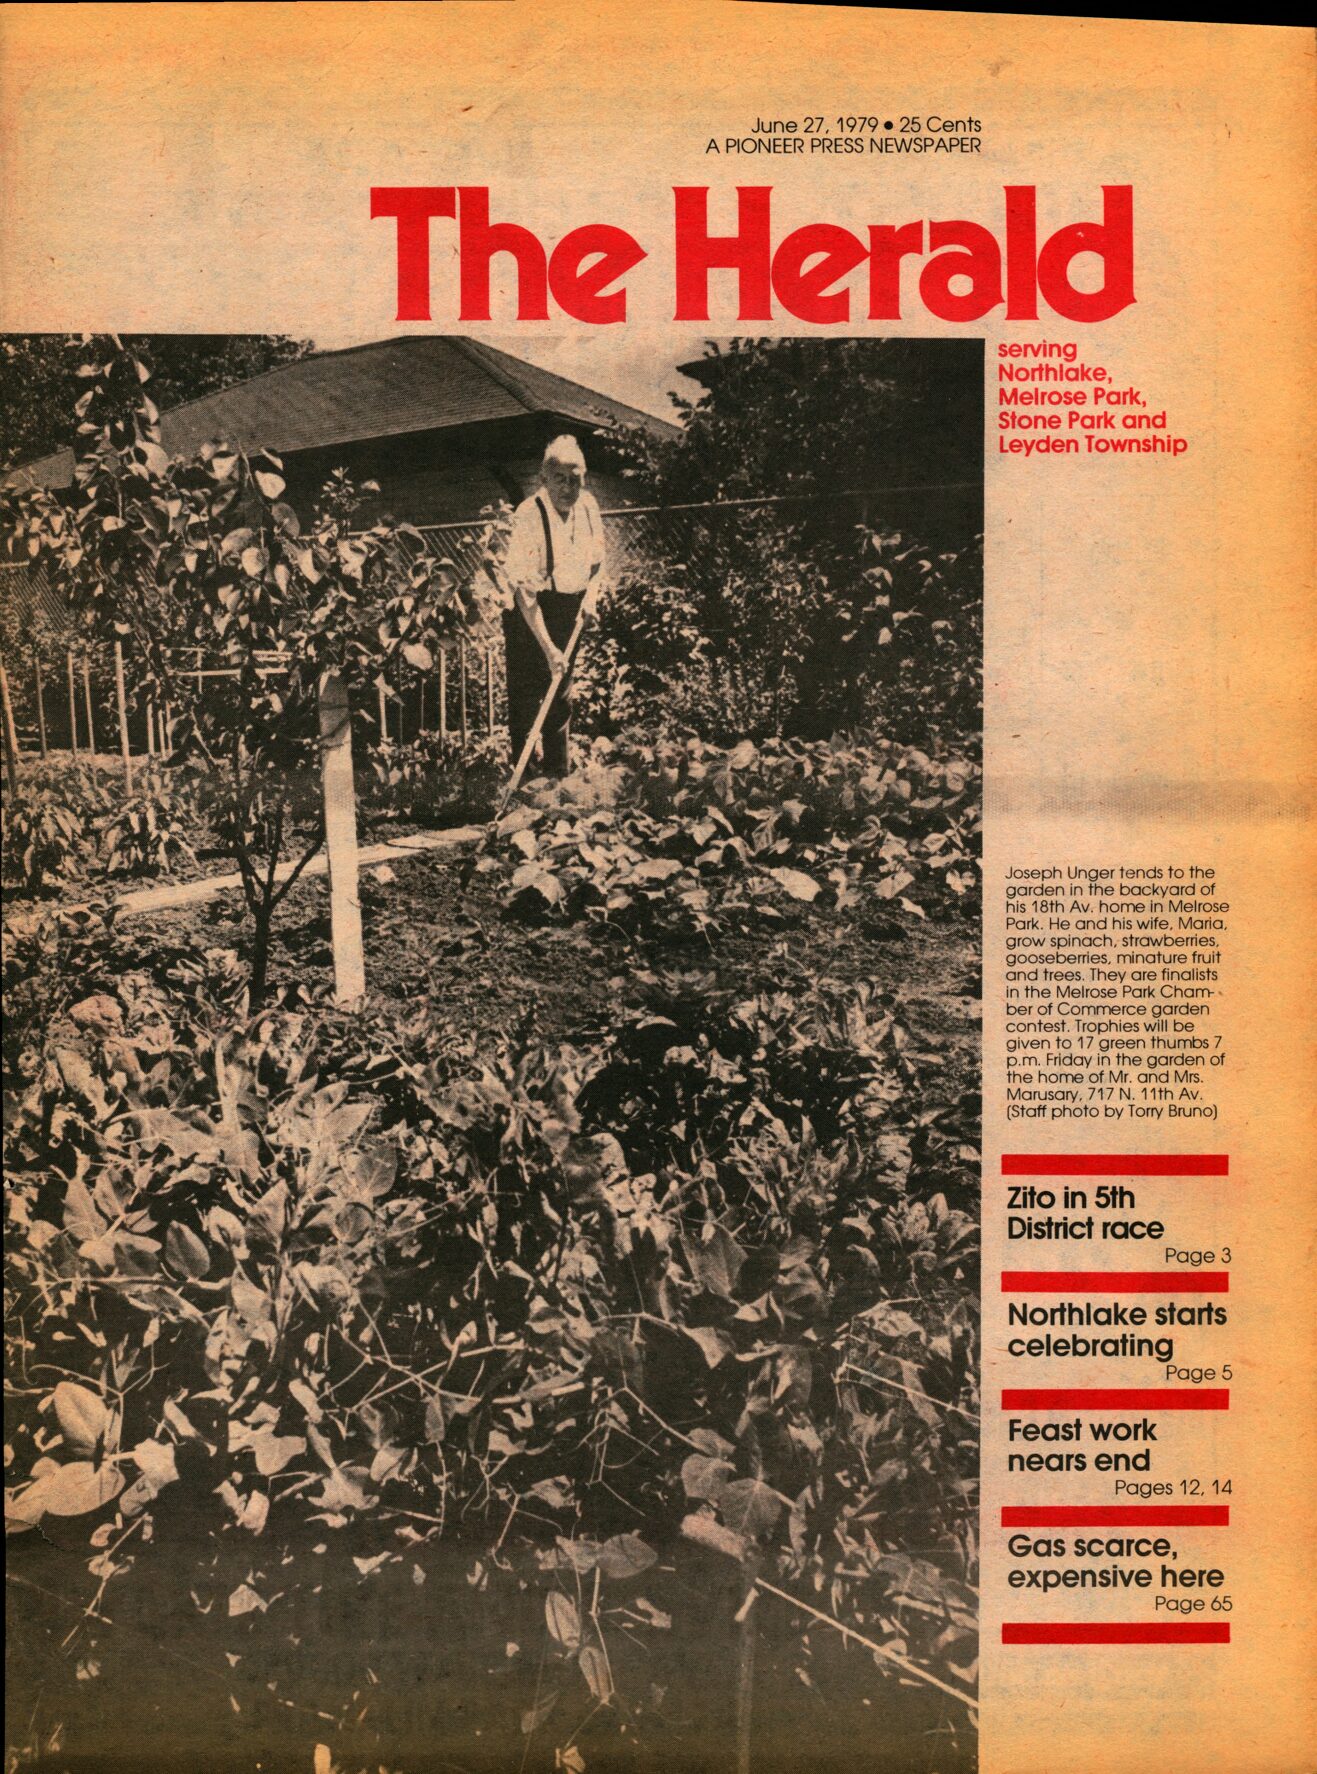 The Herald – 19790627